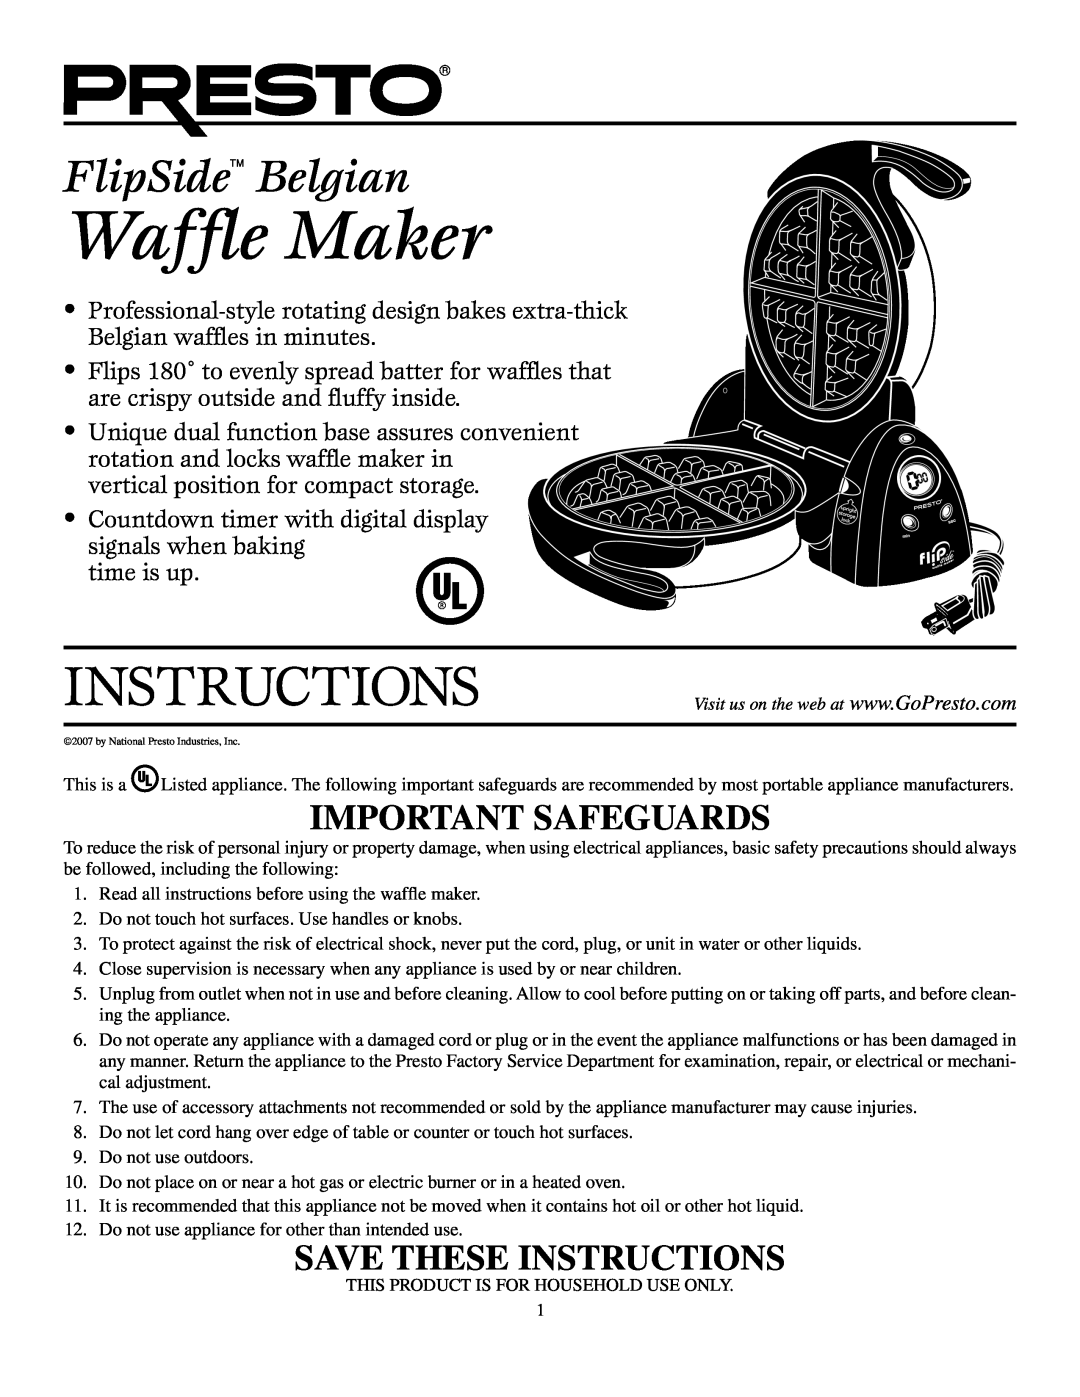 Presto manual Waffle Maker, FlipSide Belgian, Important Safeguards, Save These Instructions 